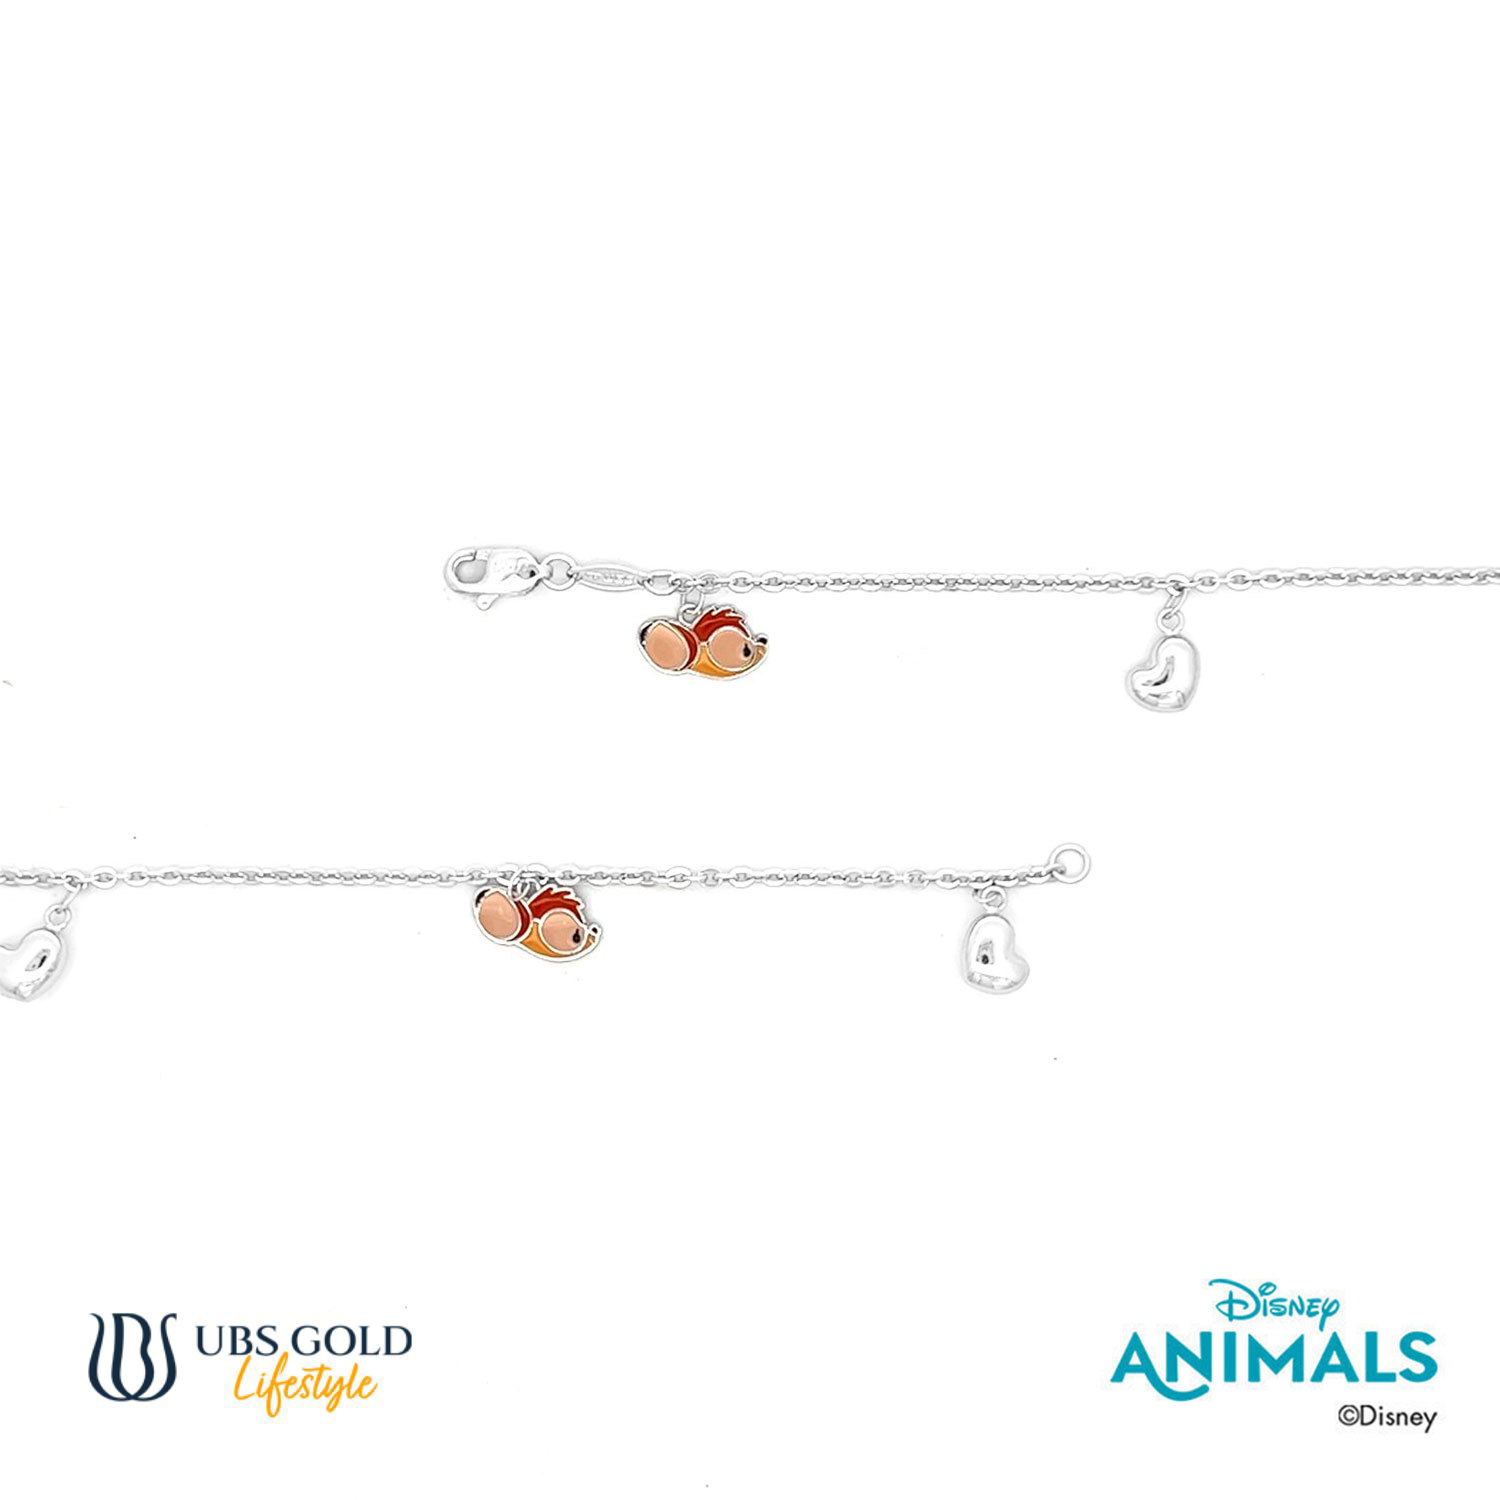 UBS Gold Gelang Emas Anak Disney Animals - Hgy0095 - 17K